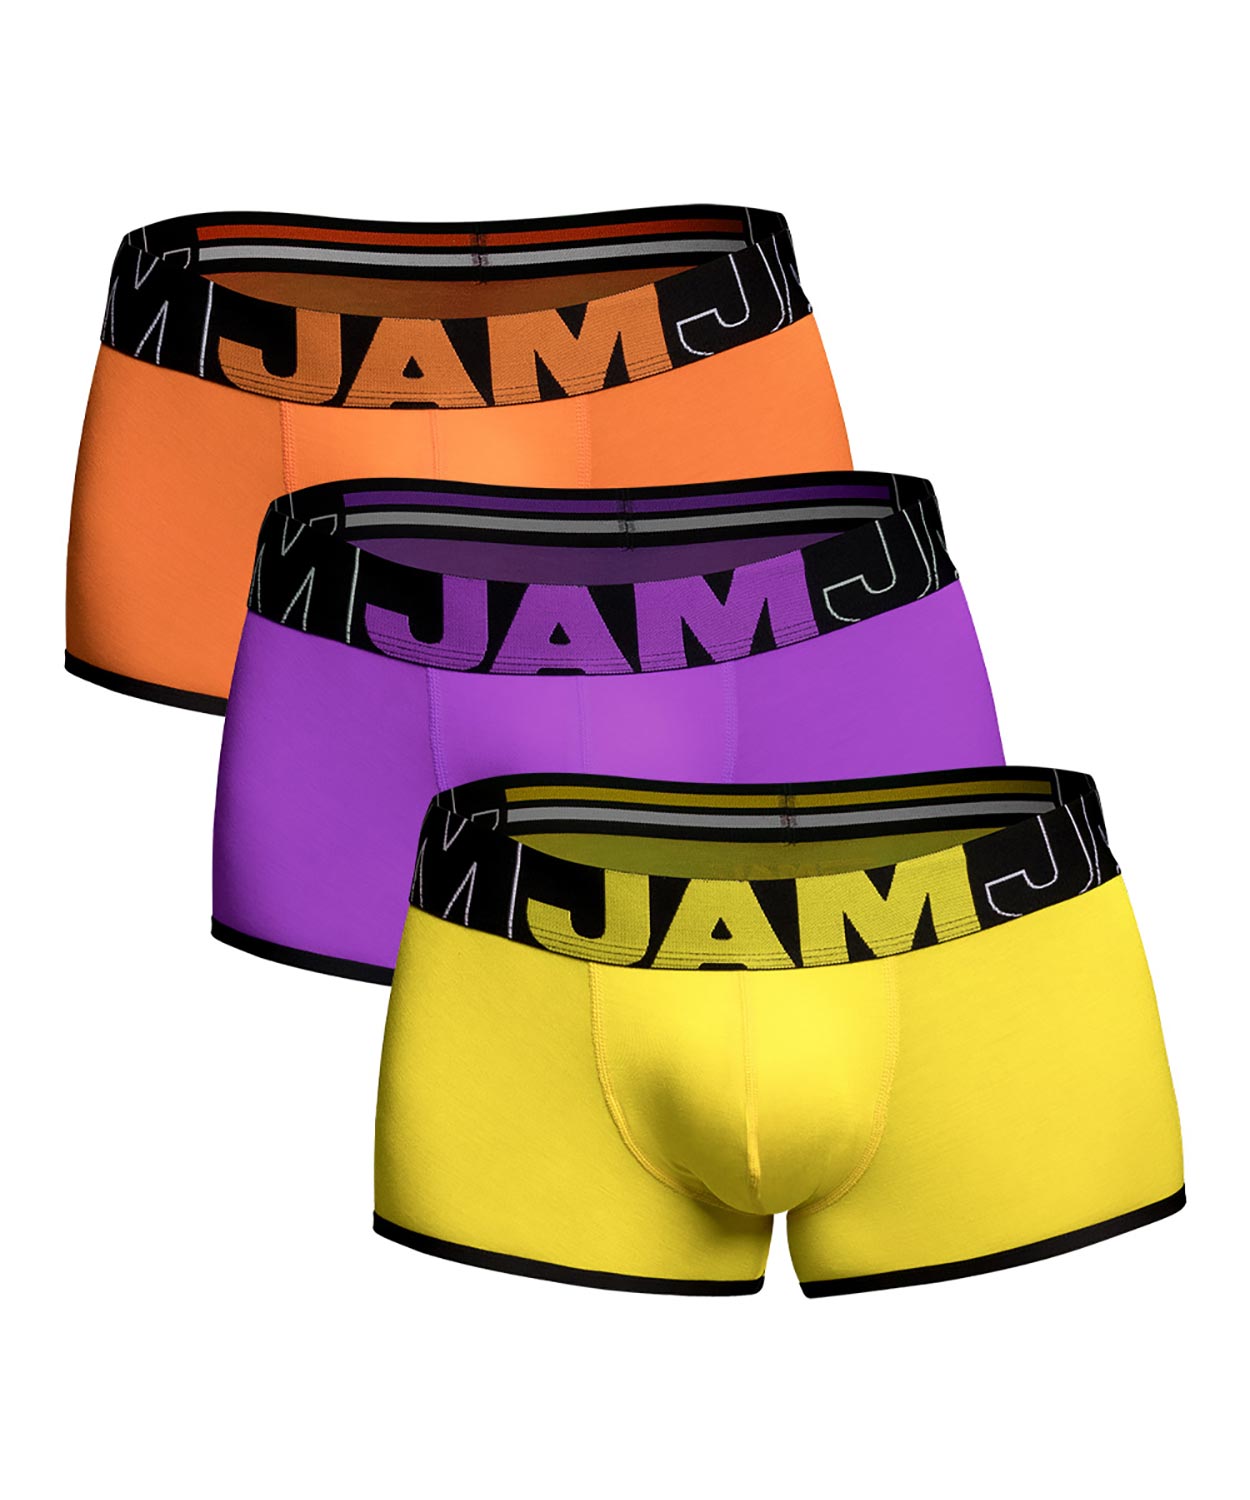 JAM - Trunk - 3 Pack